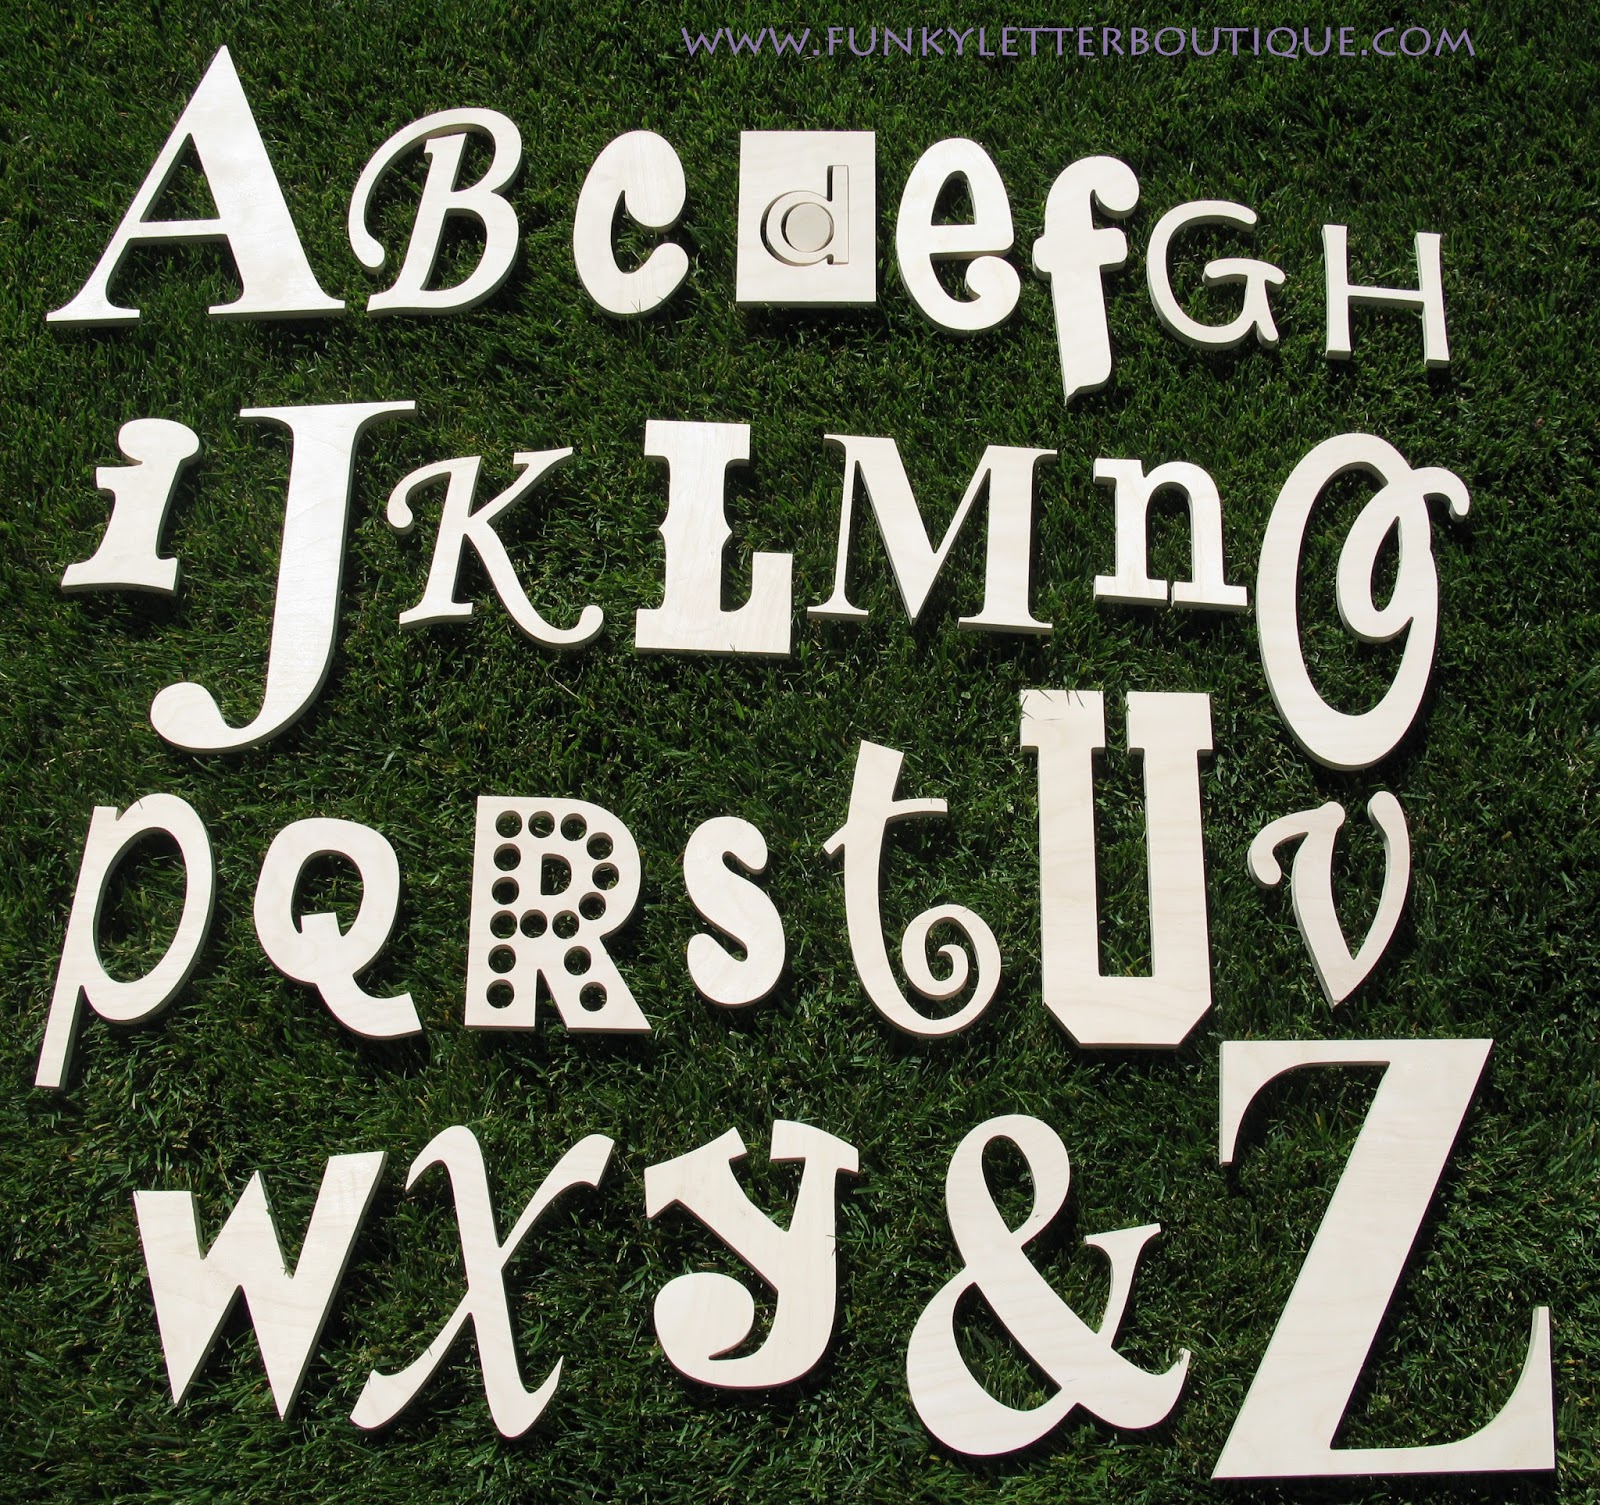 The Funky Letter Boutique: DIY Alphabet Wall Letter Set... Huge hit on